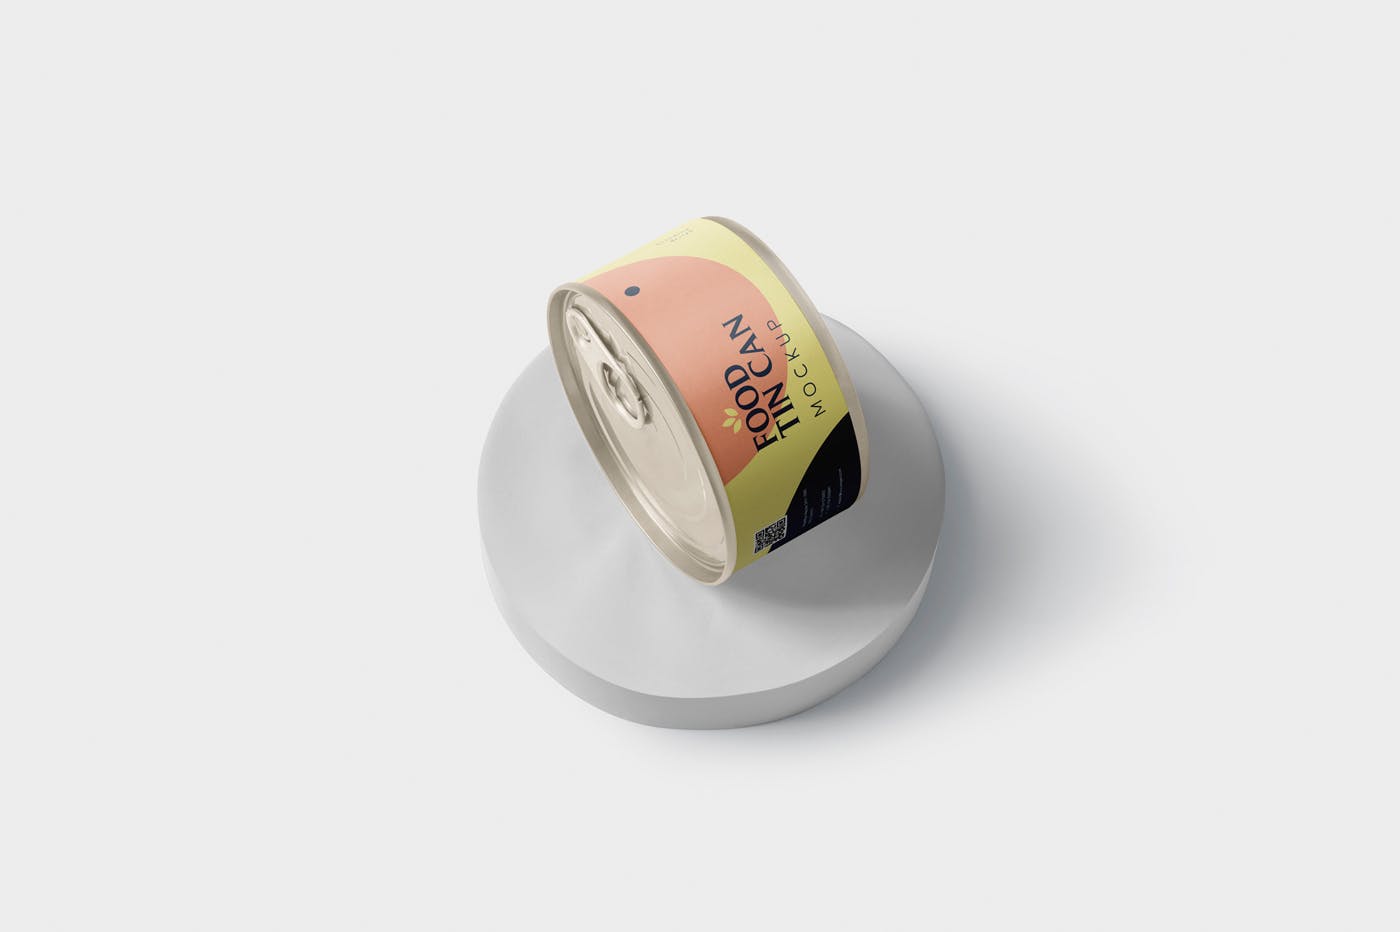 迷你型食品罐头外观设计图样机模板 Food Tin Can Mockup Small Size – Round插图(3)